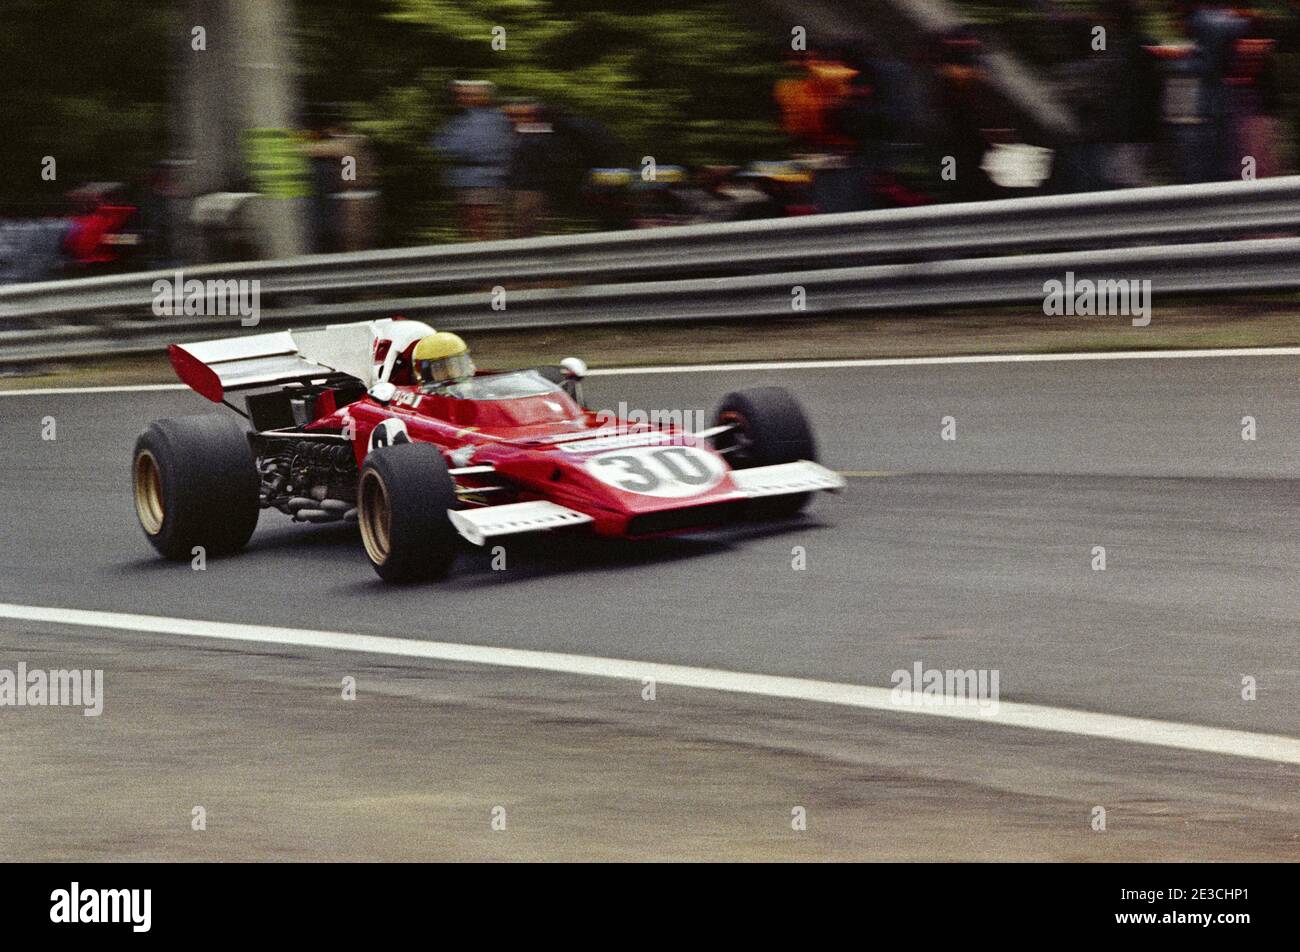 Nanni GALLI driving Ferrari F1 car in full speed during 1972 Grand Prix de France, in Charade circuit near Clermont-Ferrand. Stock Photo